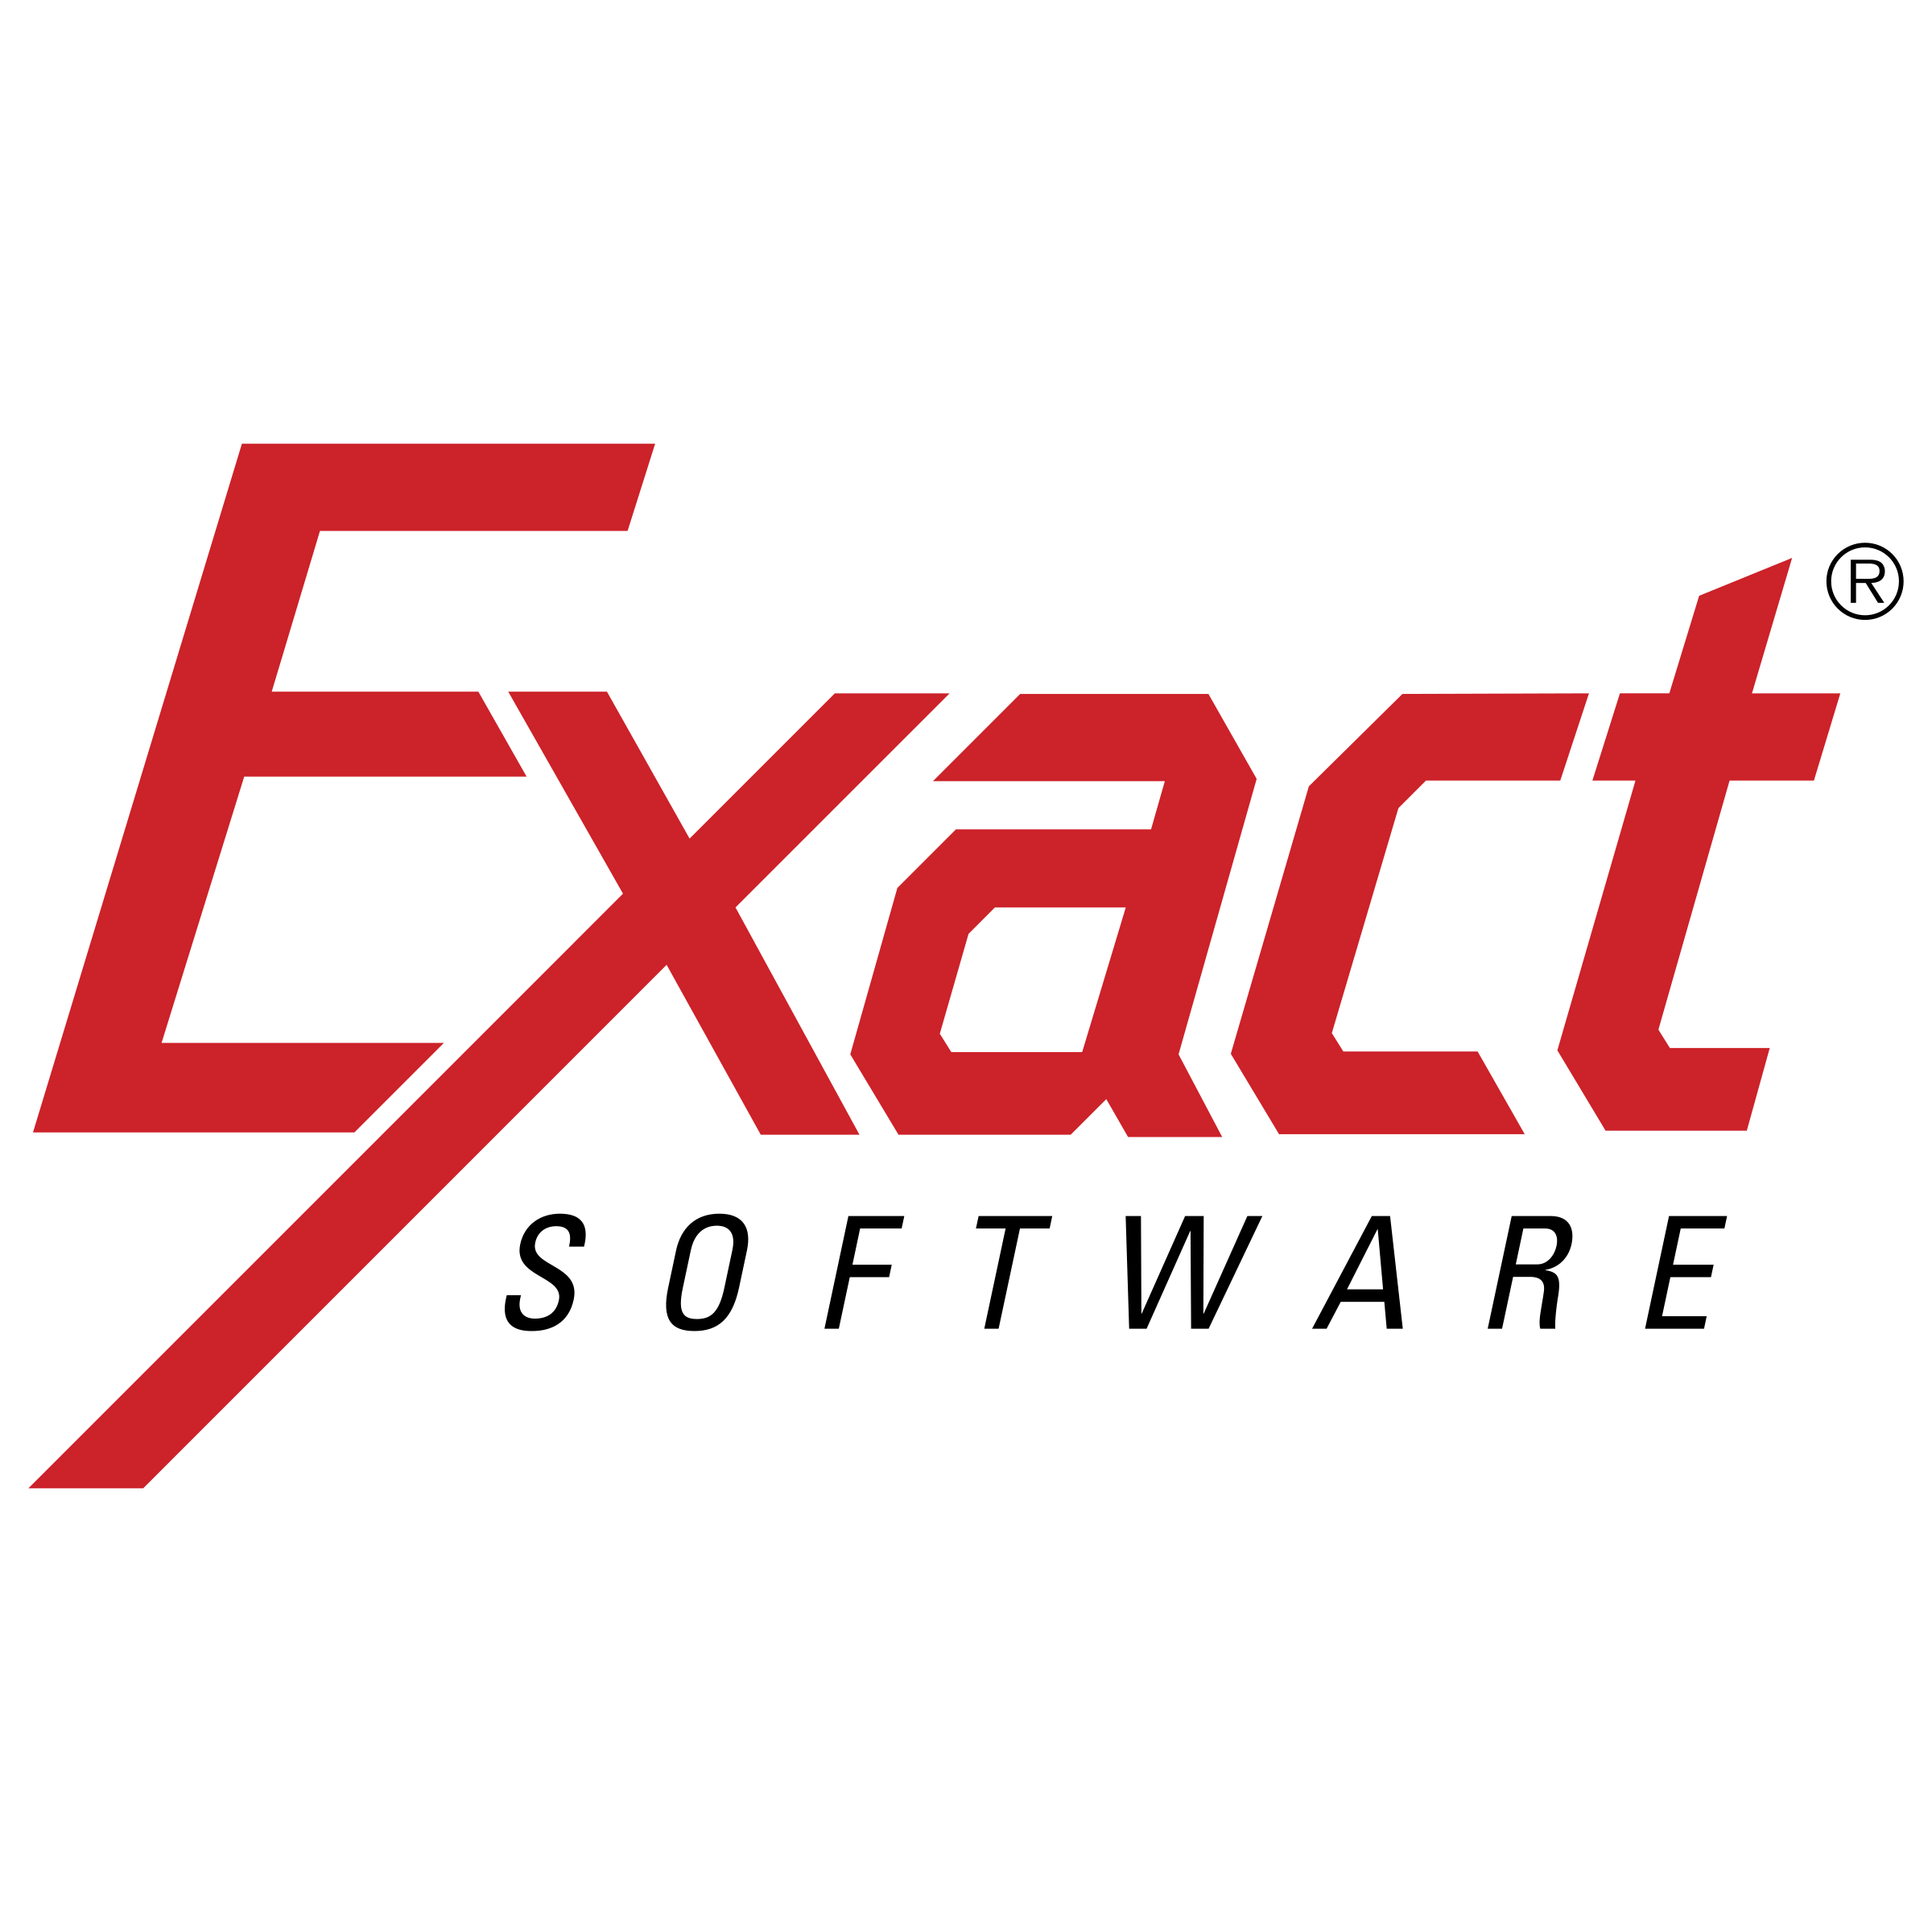 Exact Logo - Exact Software Logo PNG Transparent & SVG Vector - Freebie Supply